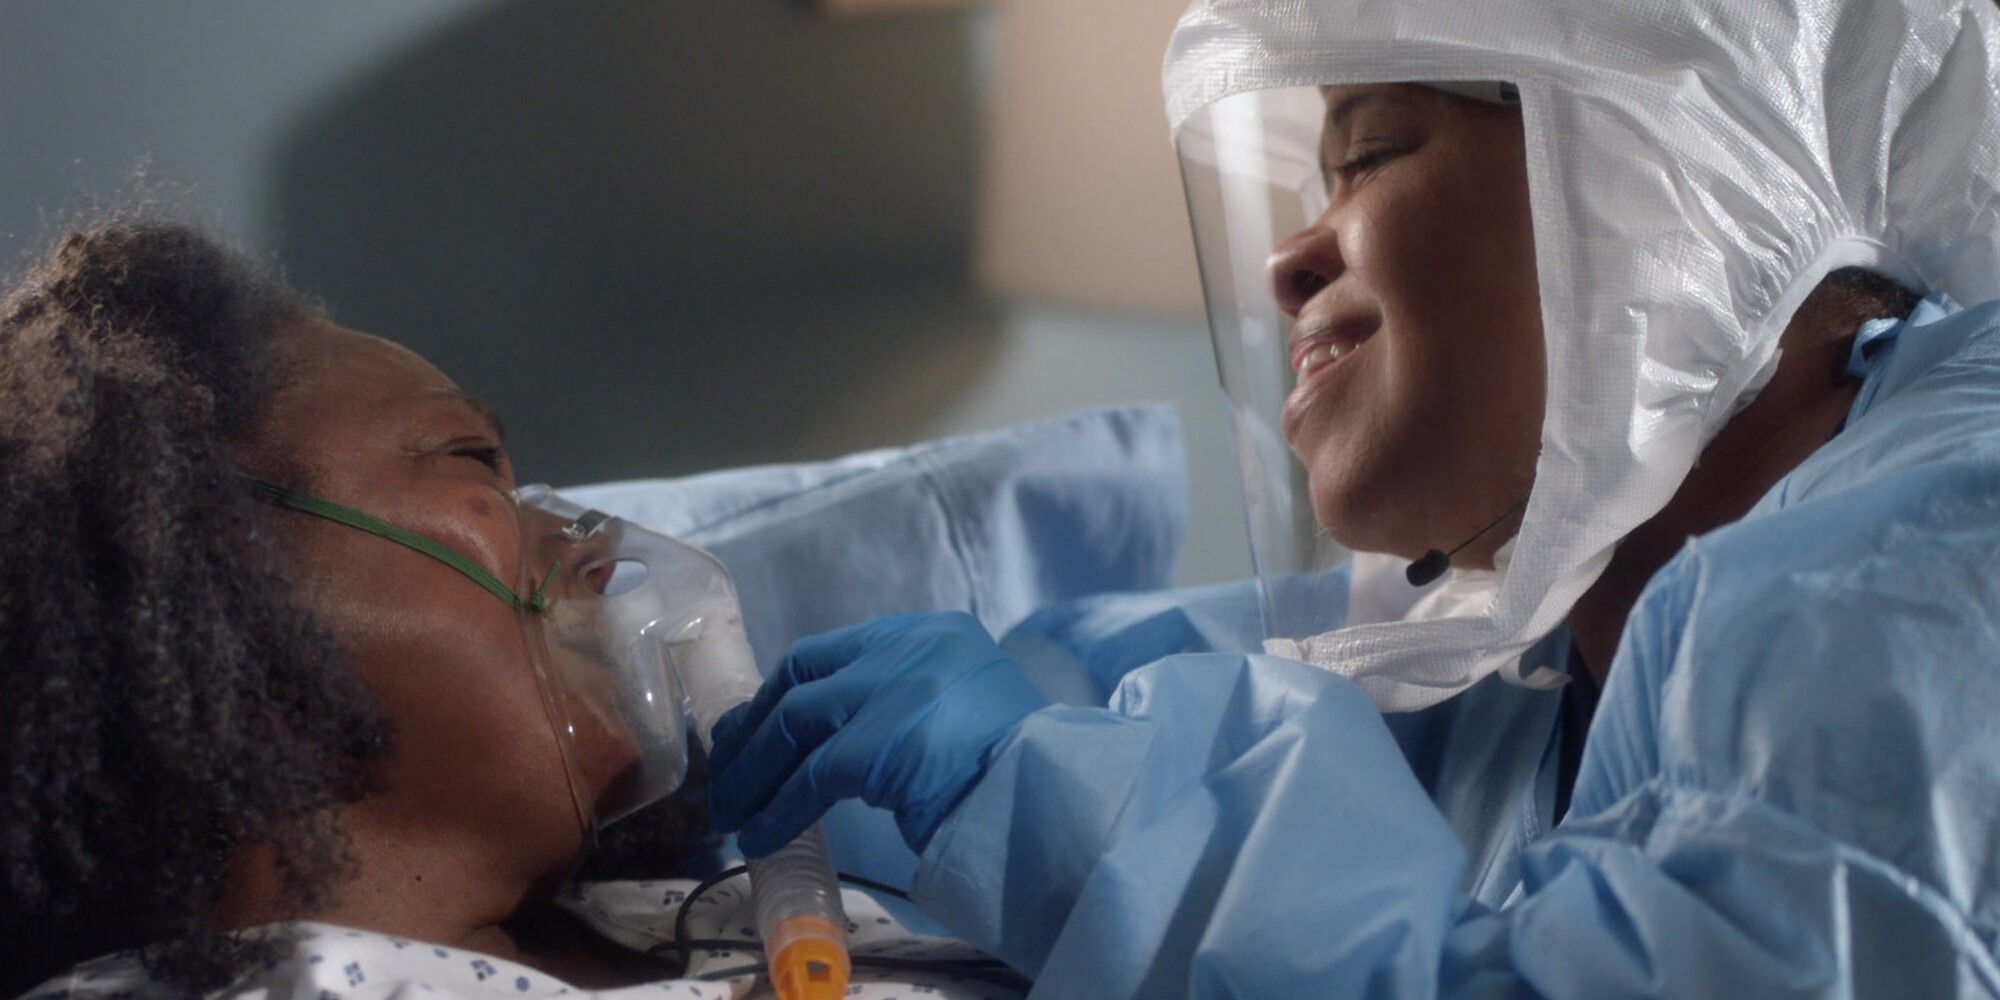 Miranda Bailey treats her mother at hospital during COVID-19 in Grey's Anatomy